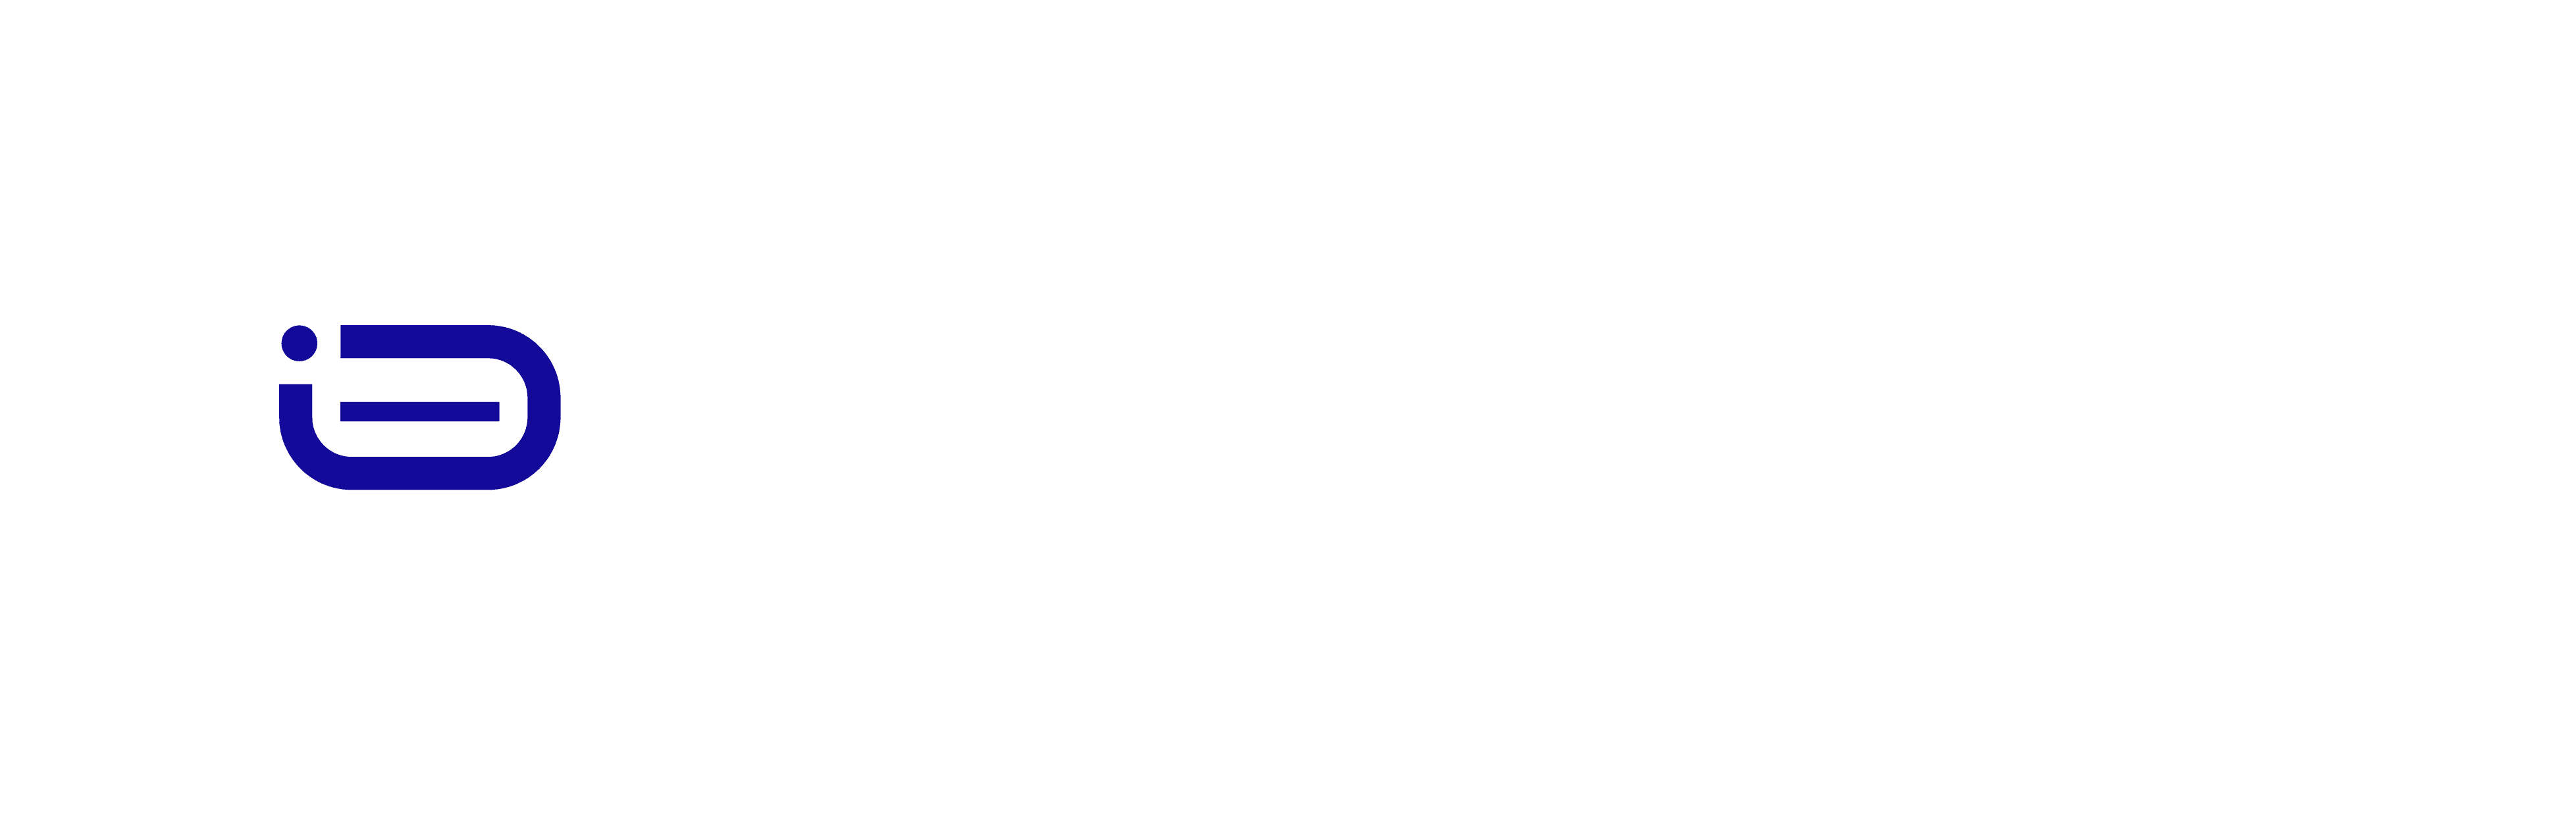 Smart Construction VR